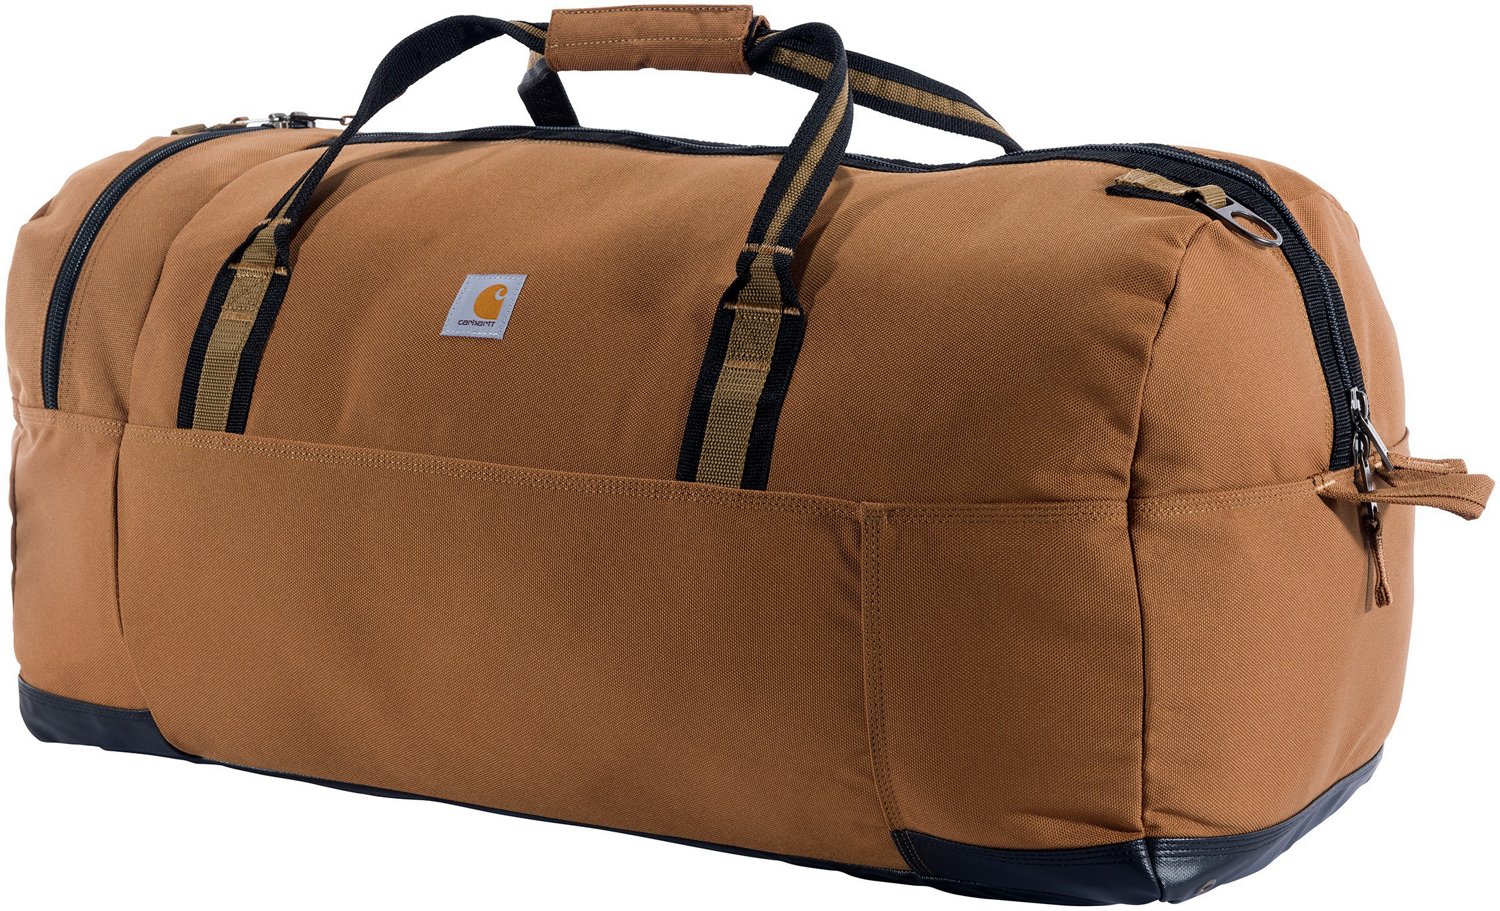 Cargo Series Messenger Bag, Rain Defender Gear